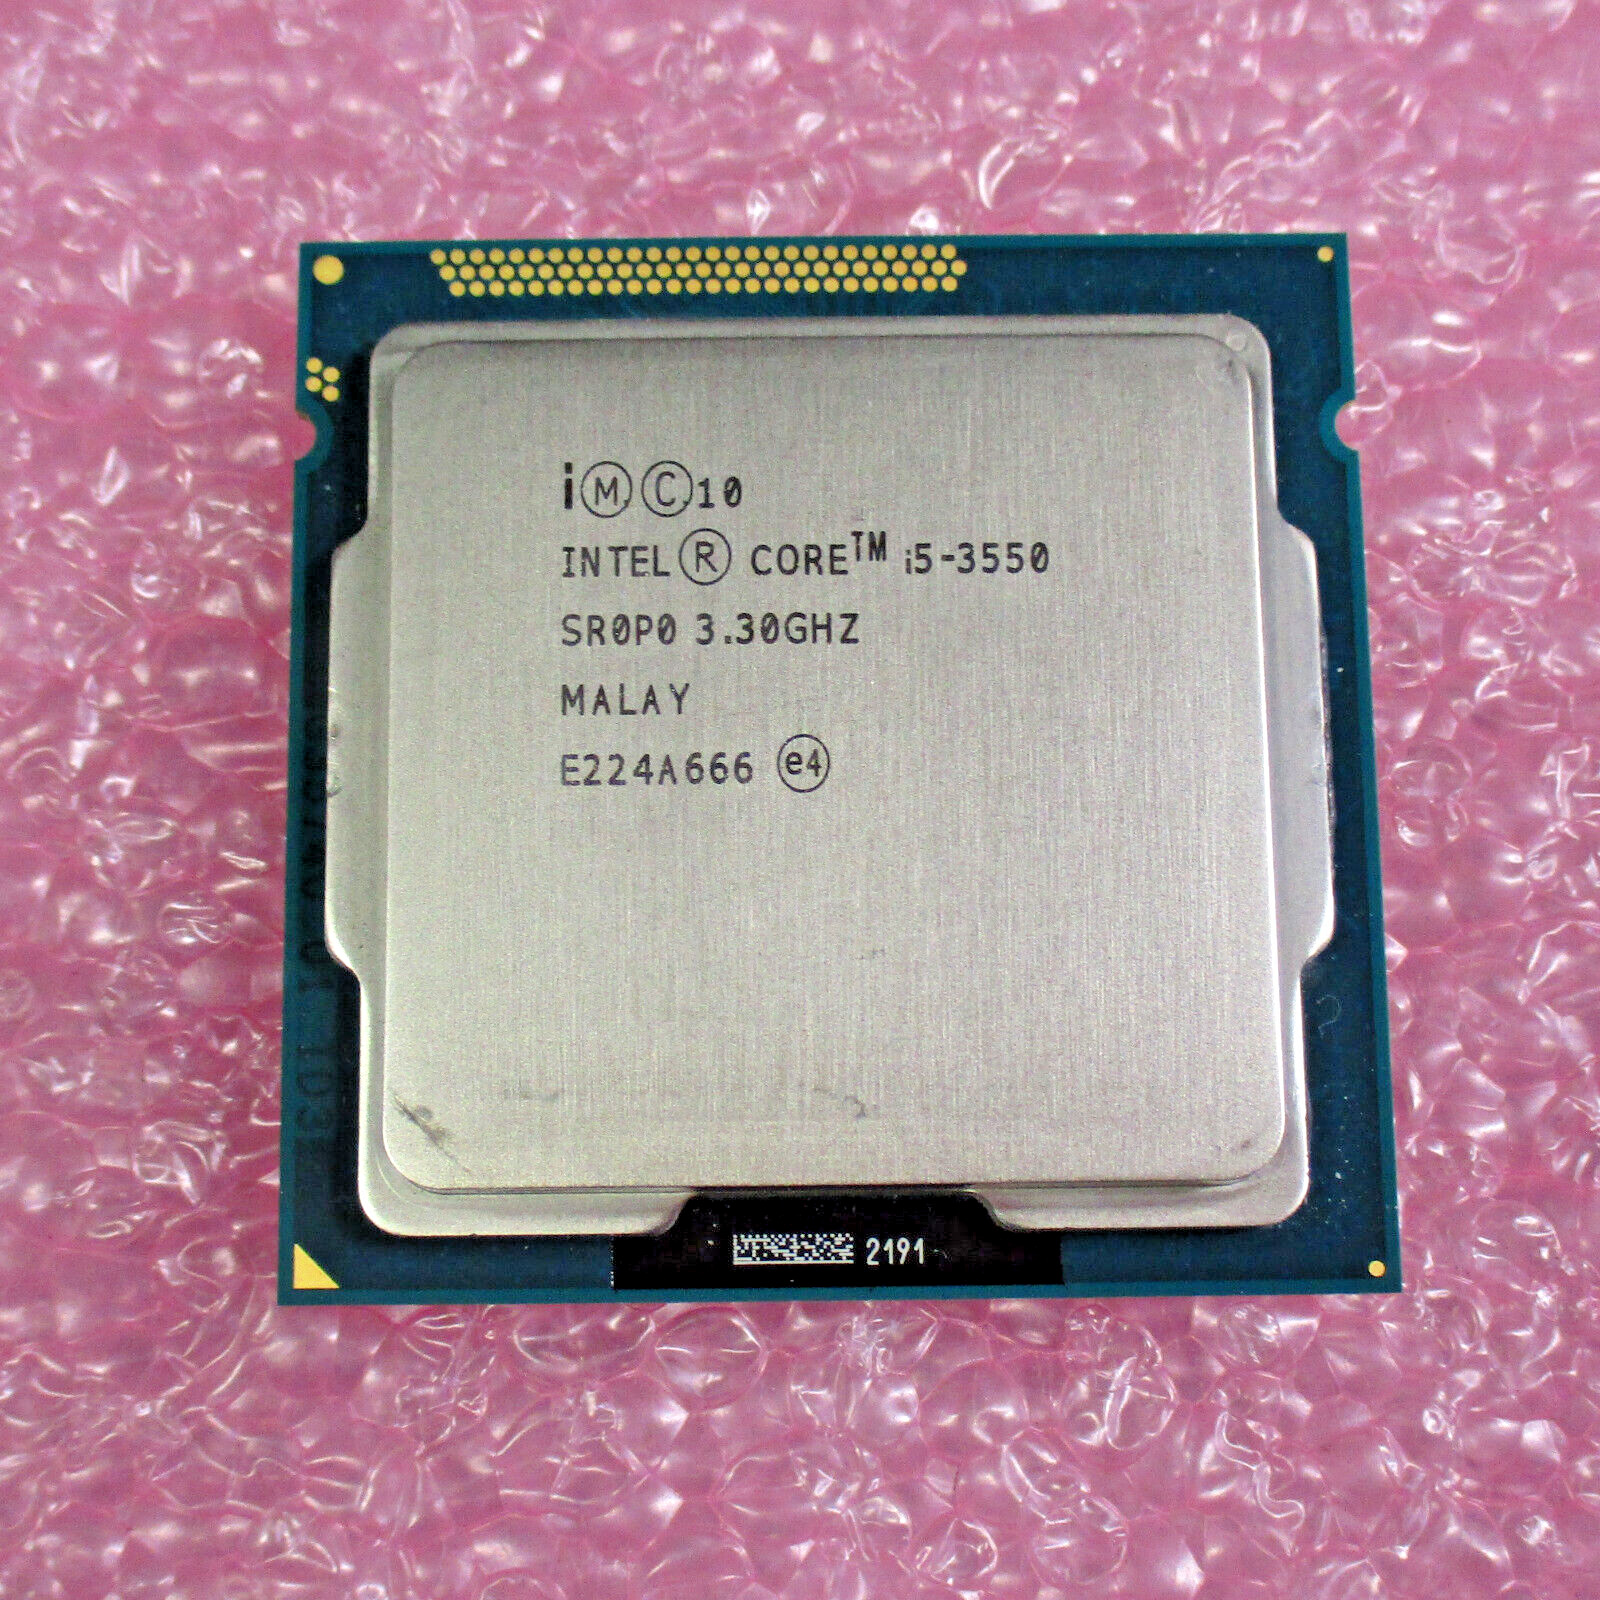 Lot of 13 Intel Core i5-3550 SR0P0 3.30GHz CPU Processors